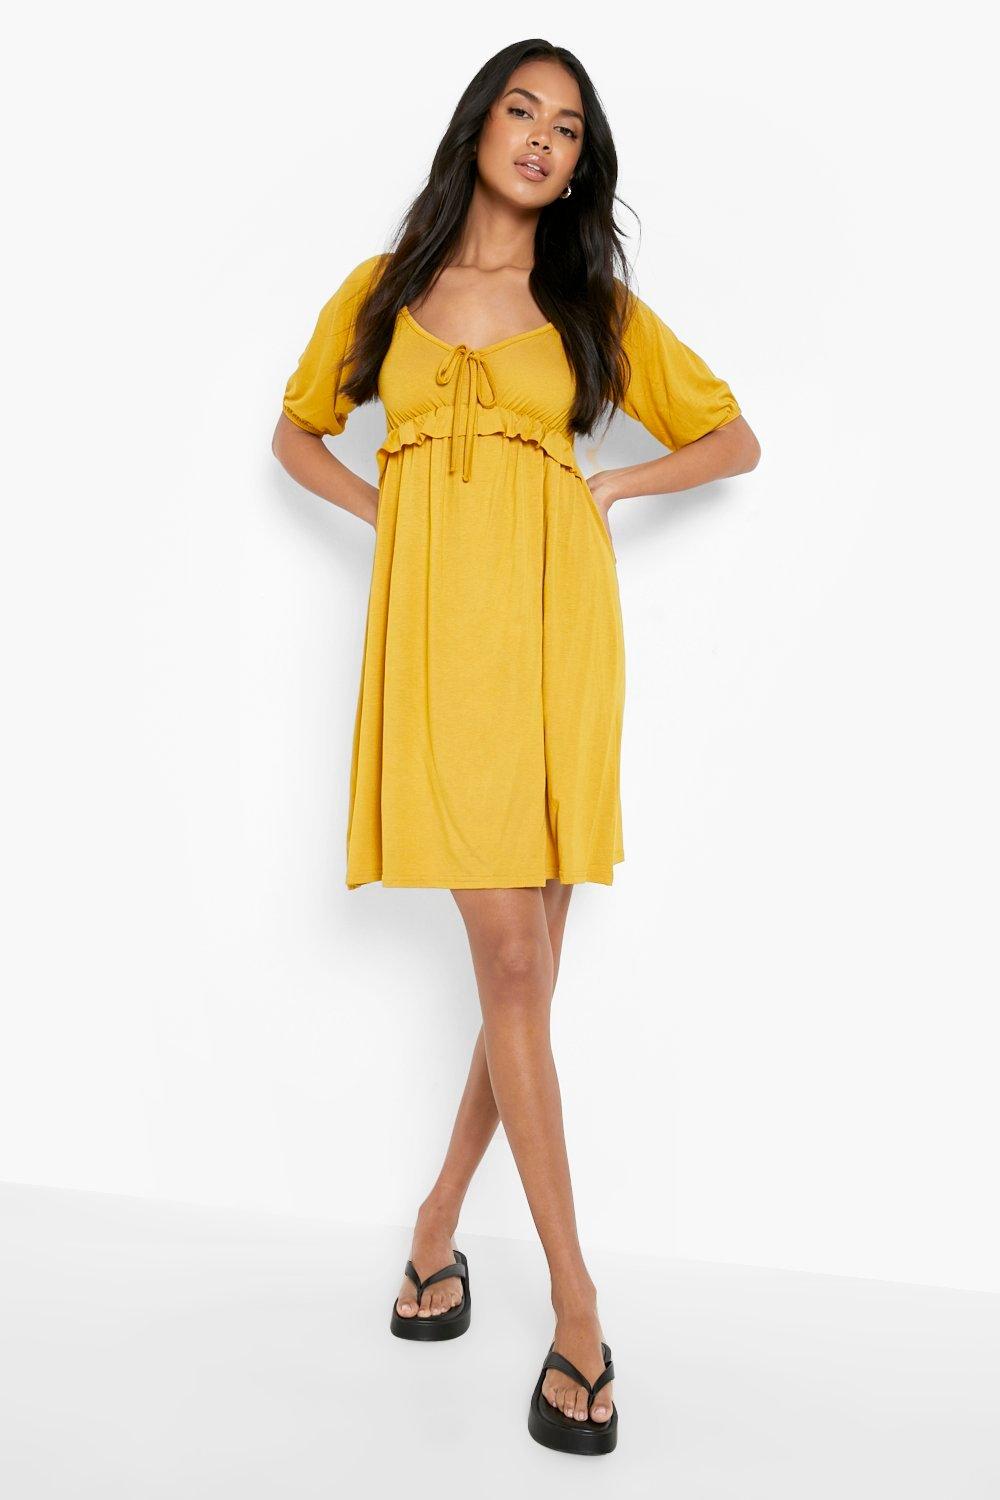 Yellow Dresses | Lemon ☀ Mustard ...